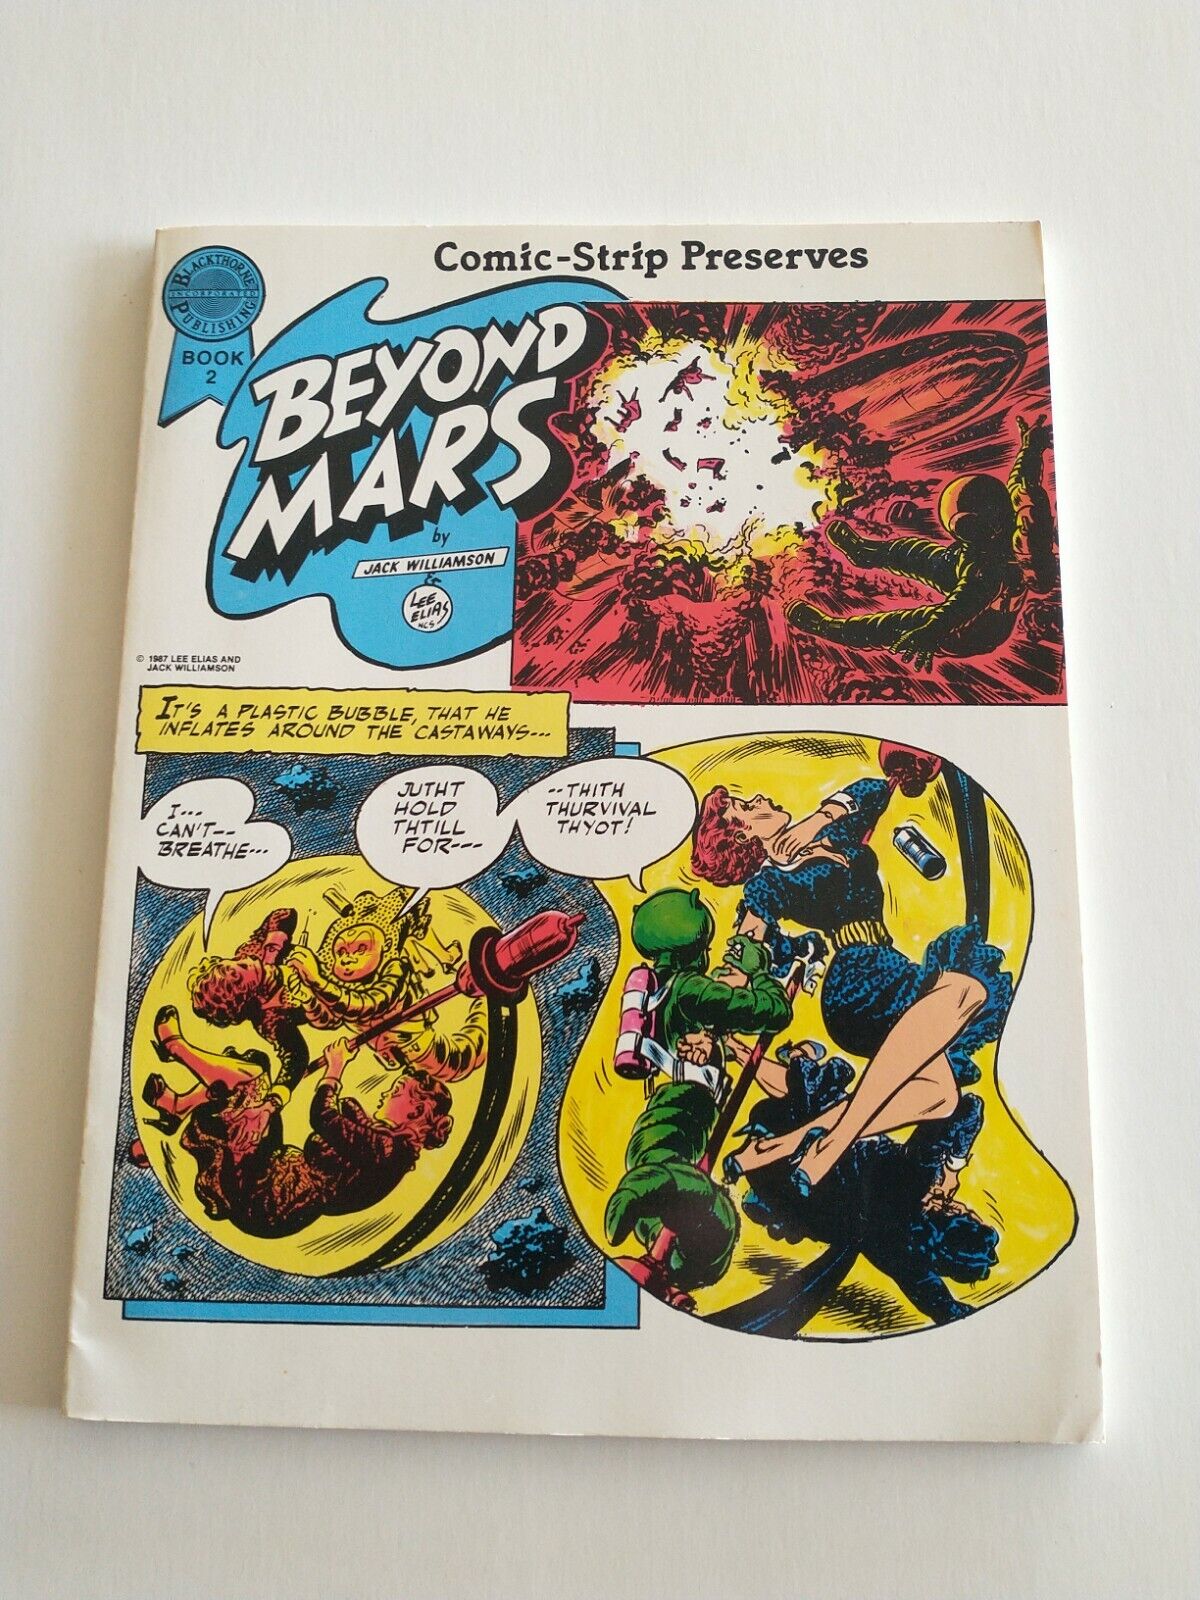 Beyond Mars  Book 2  Jack Williamson  Lee Elias Sci-Fi Comic Strip  1987